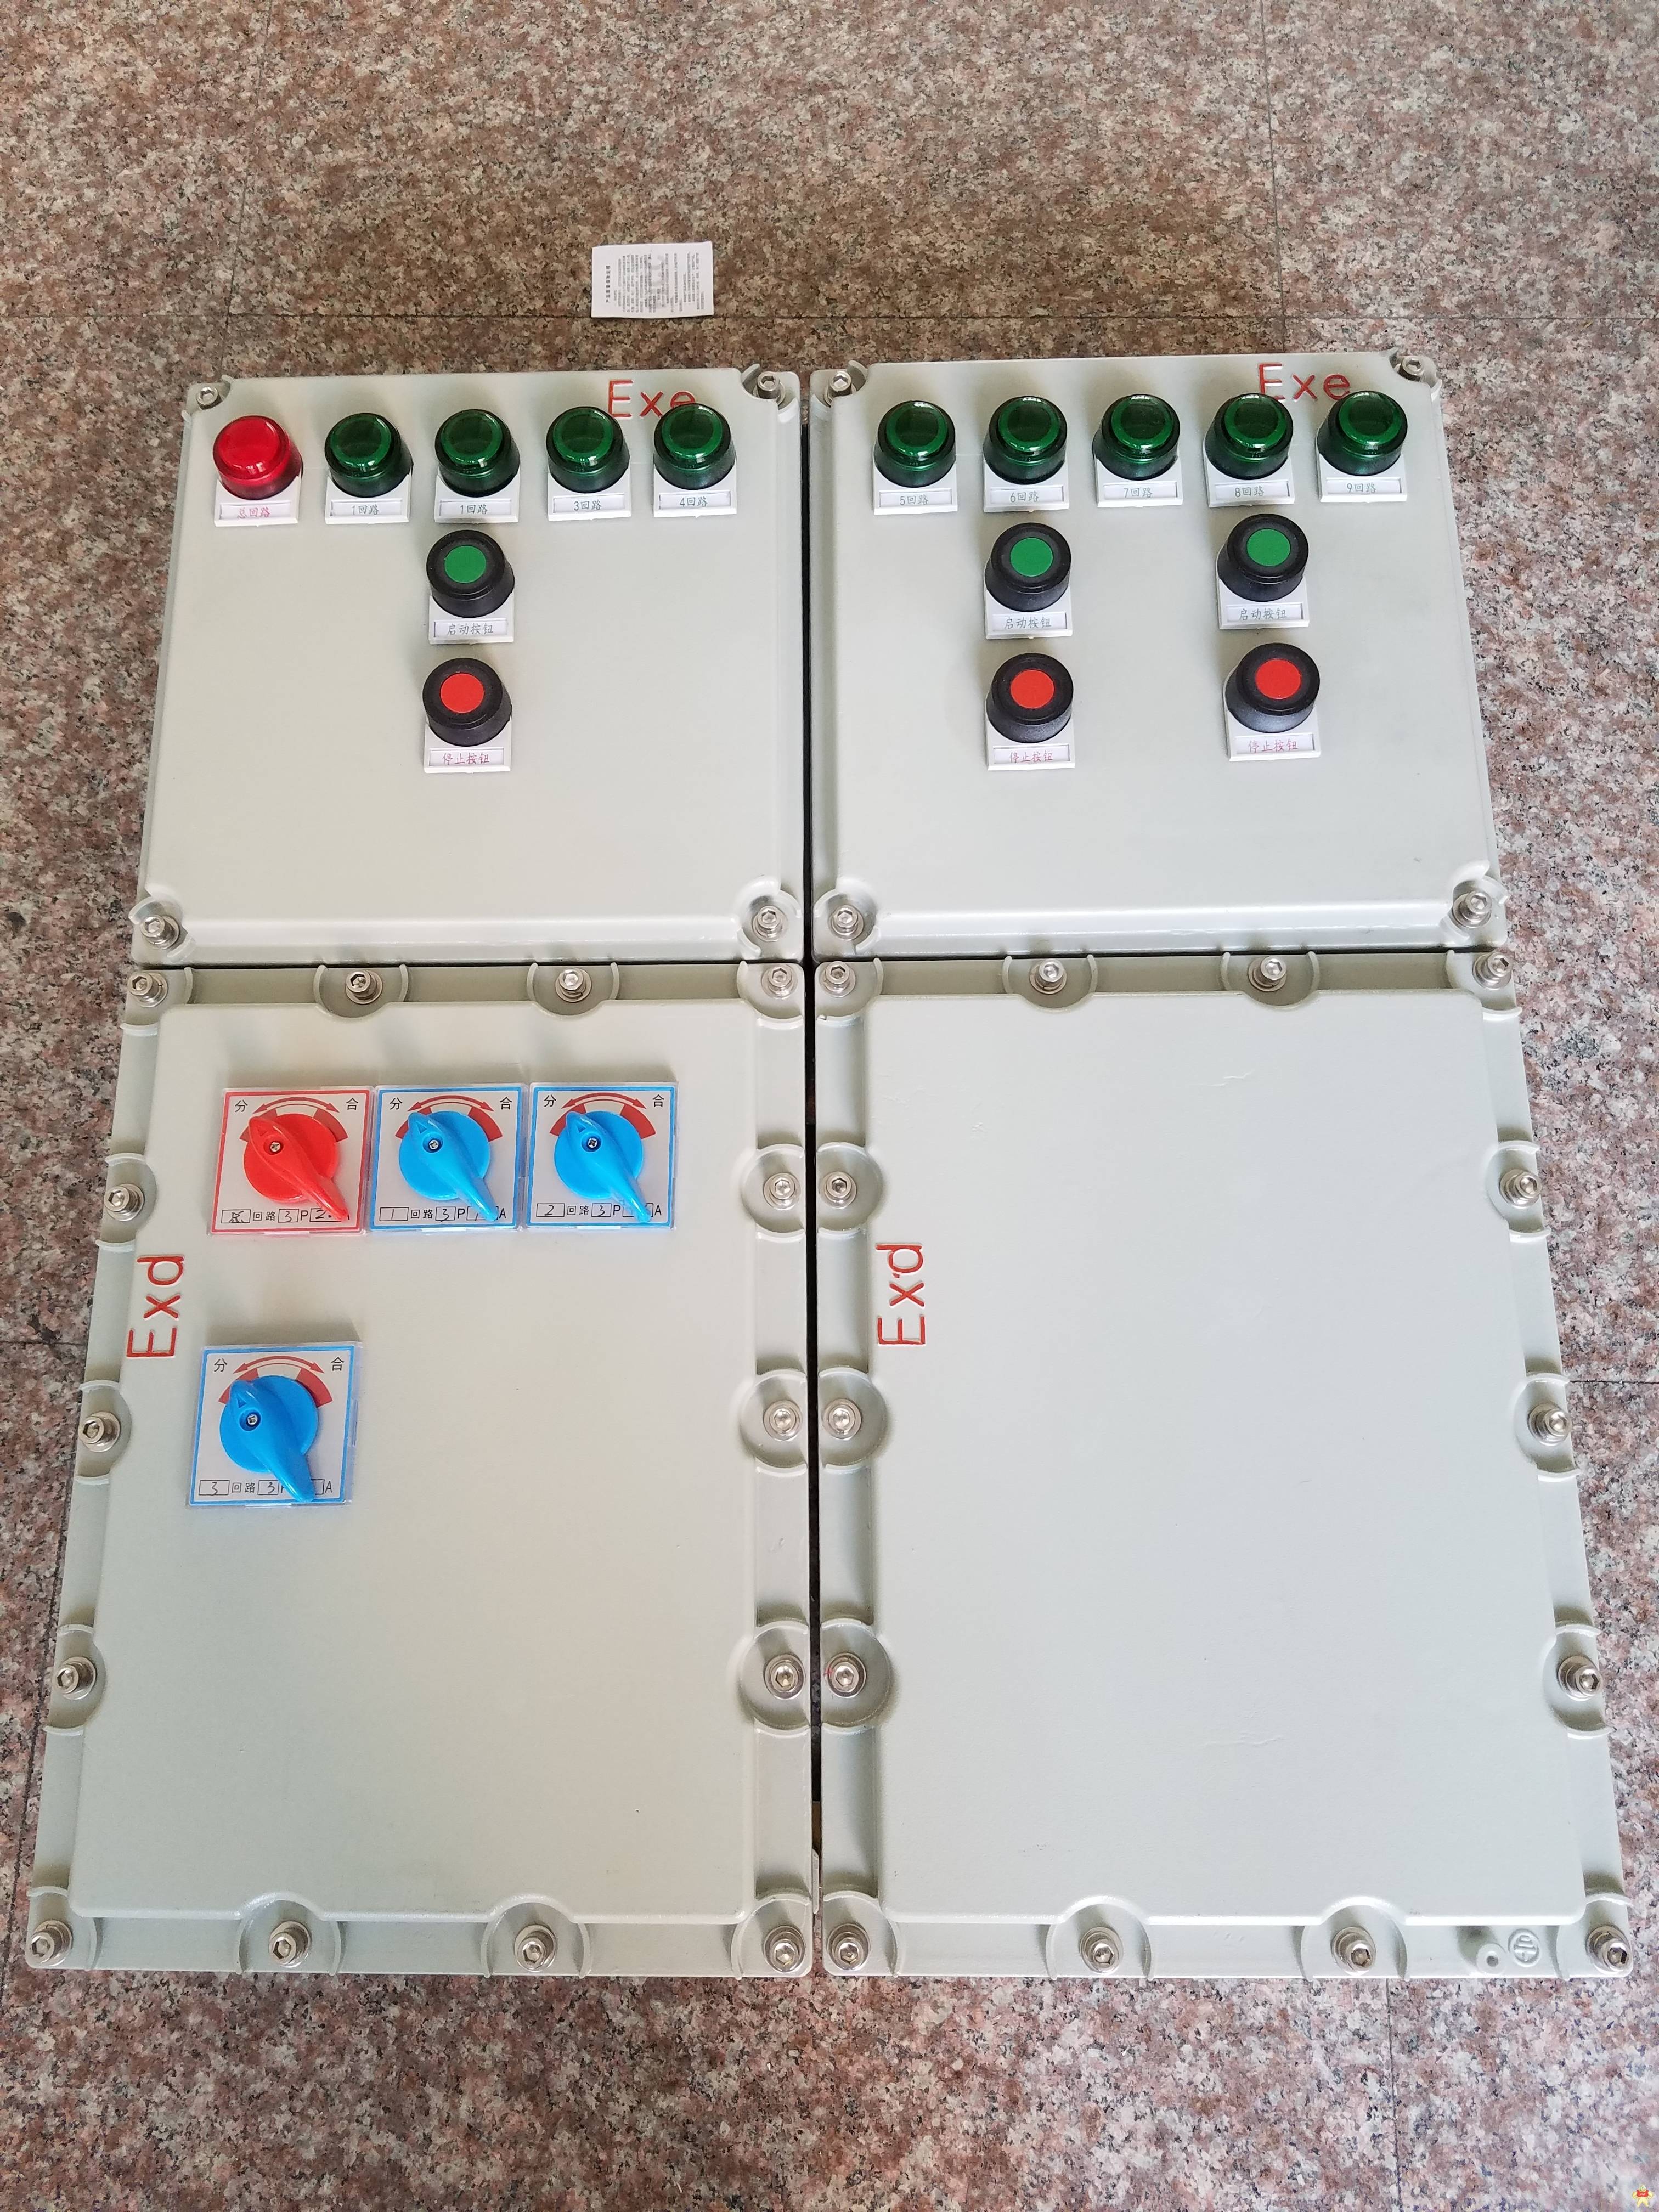 BXM(D)防爆变频控制柜 防爆变频控制柜,防爆变频控制柜,防爆变频控制柜,防爆变频控制柜,防爆变频控制柜